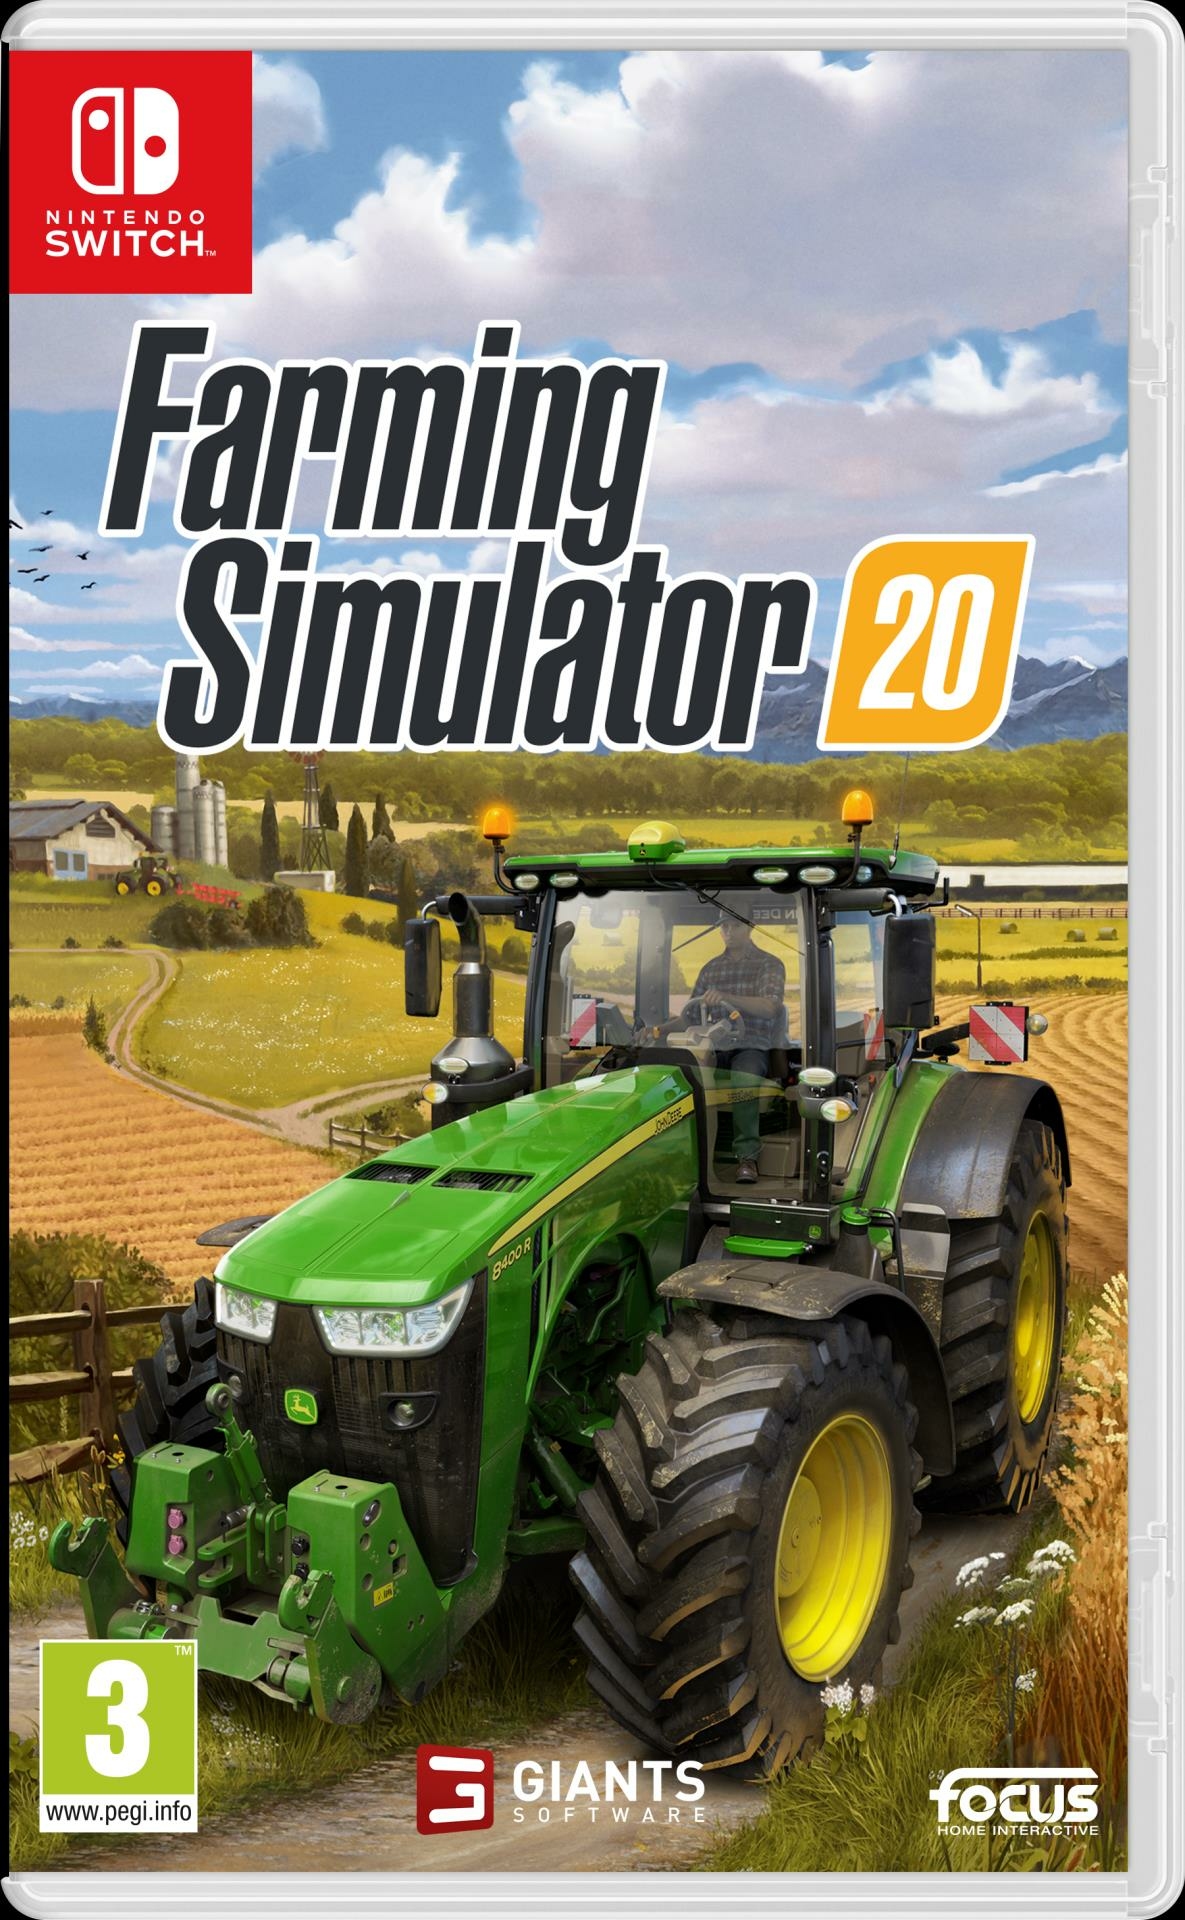 farming simulator 19 switch